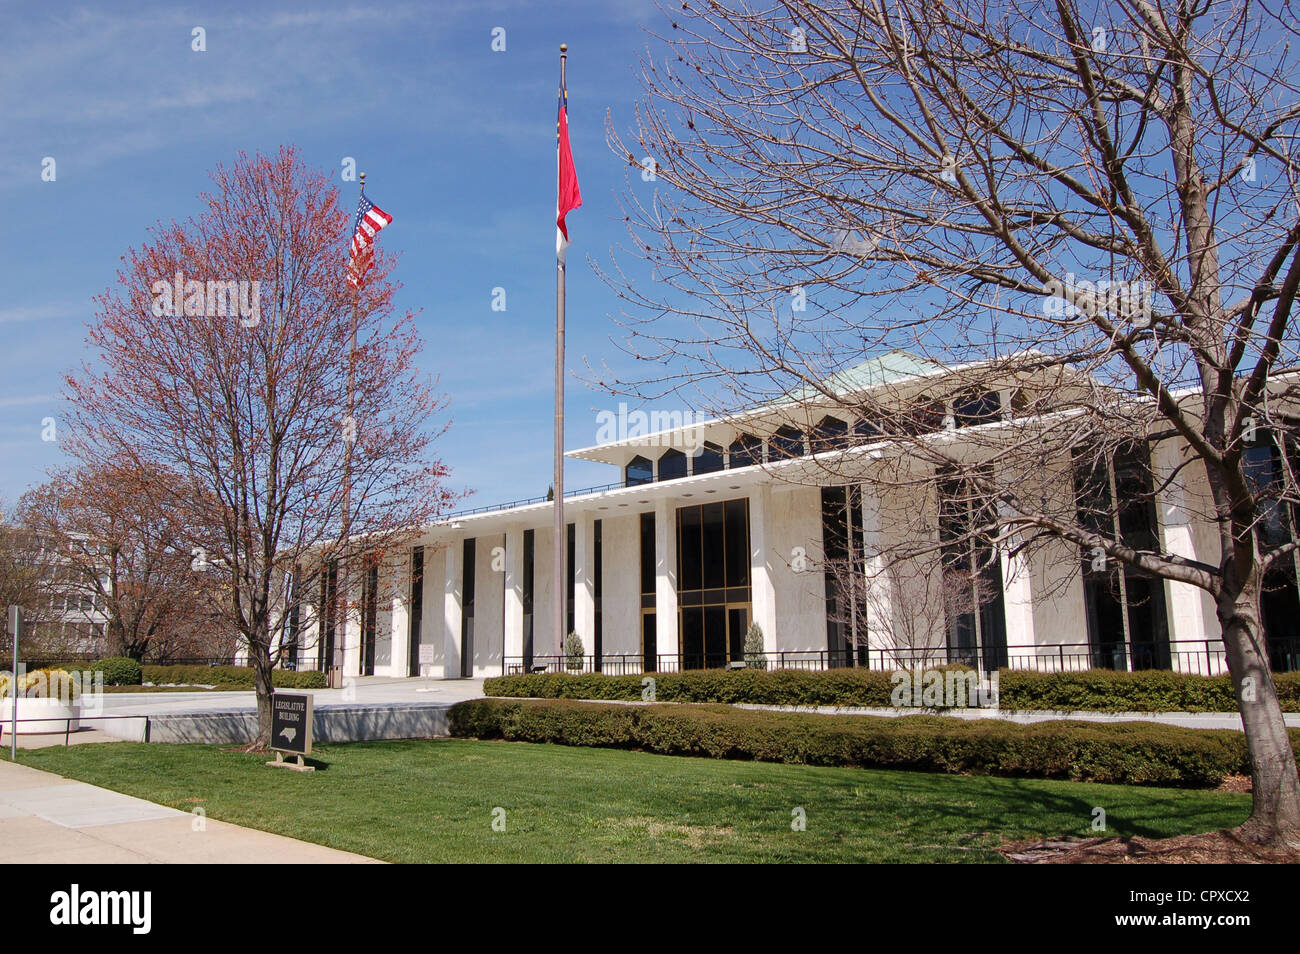 The North Carolina Legislative Building in Raleigh, North Carolina Stock Photo